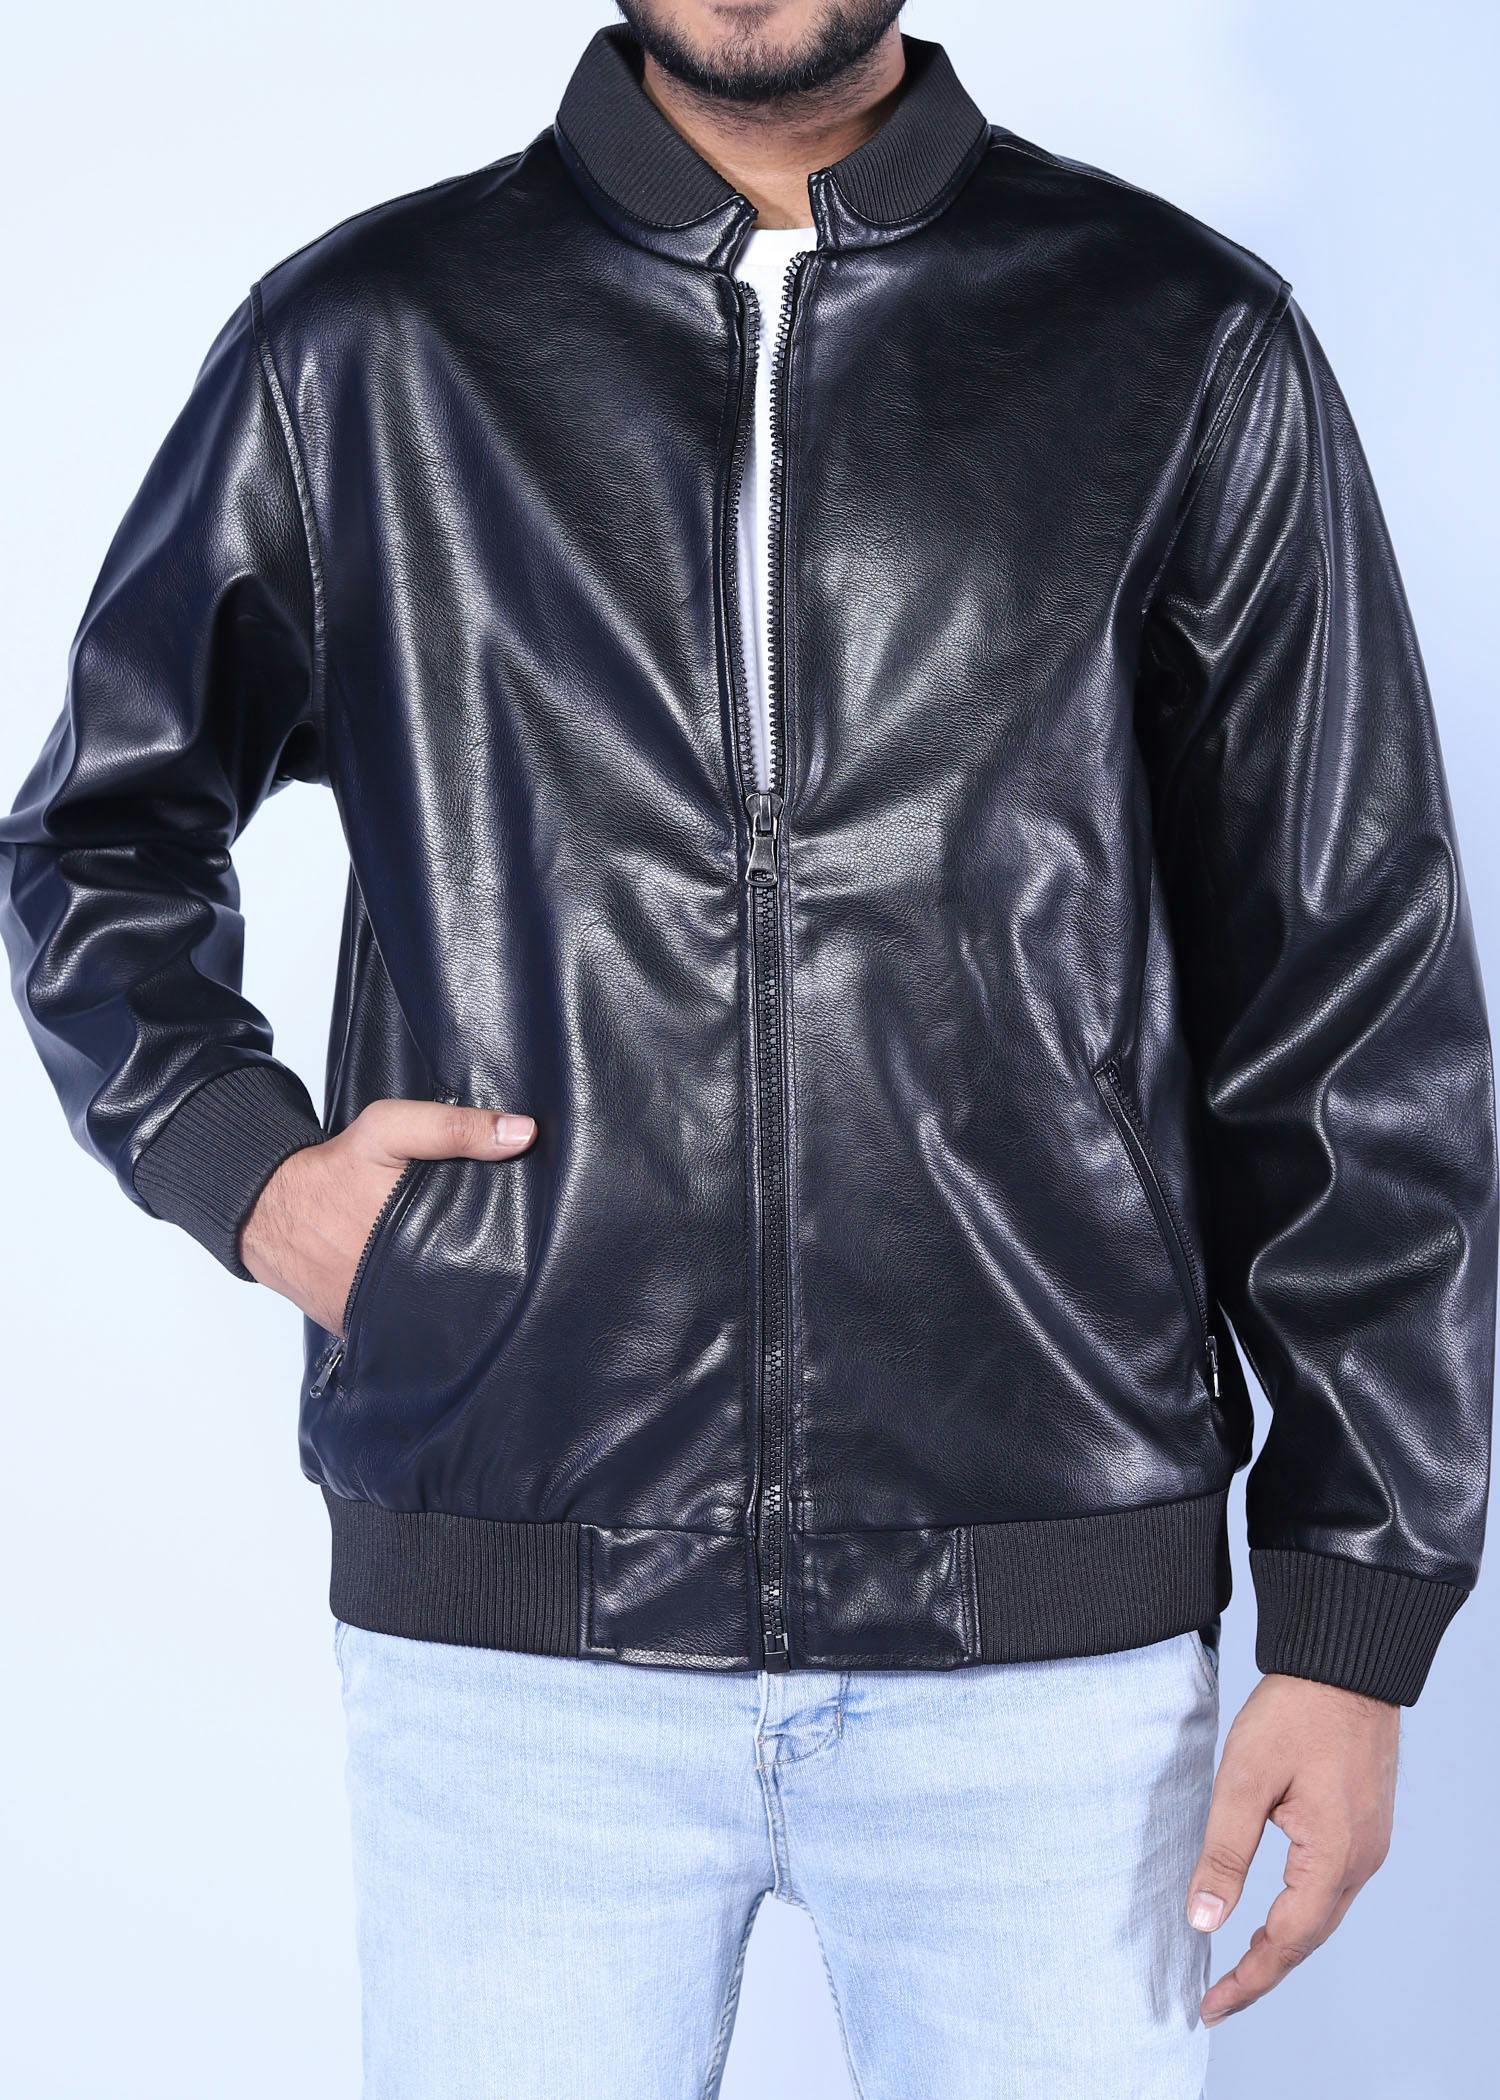 sunbittern leather jacket black color half front view